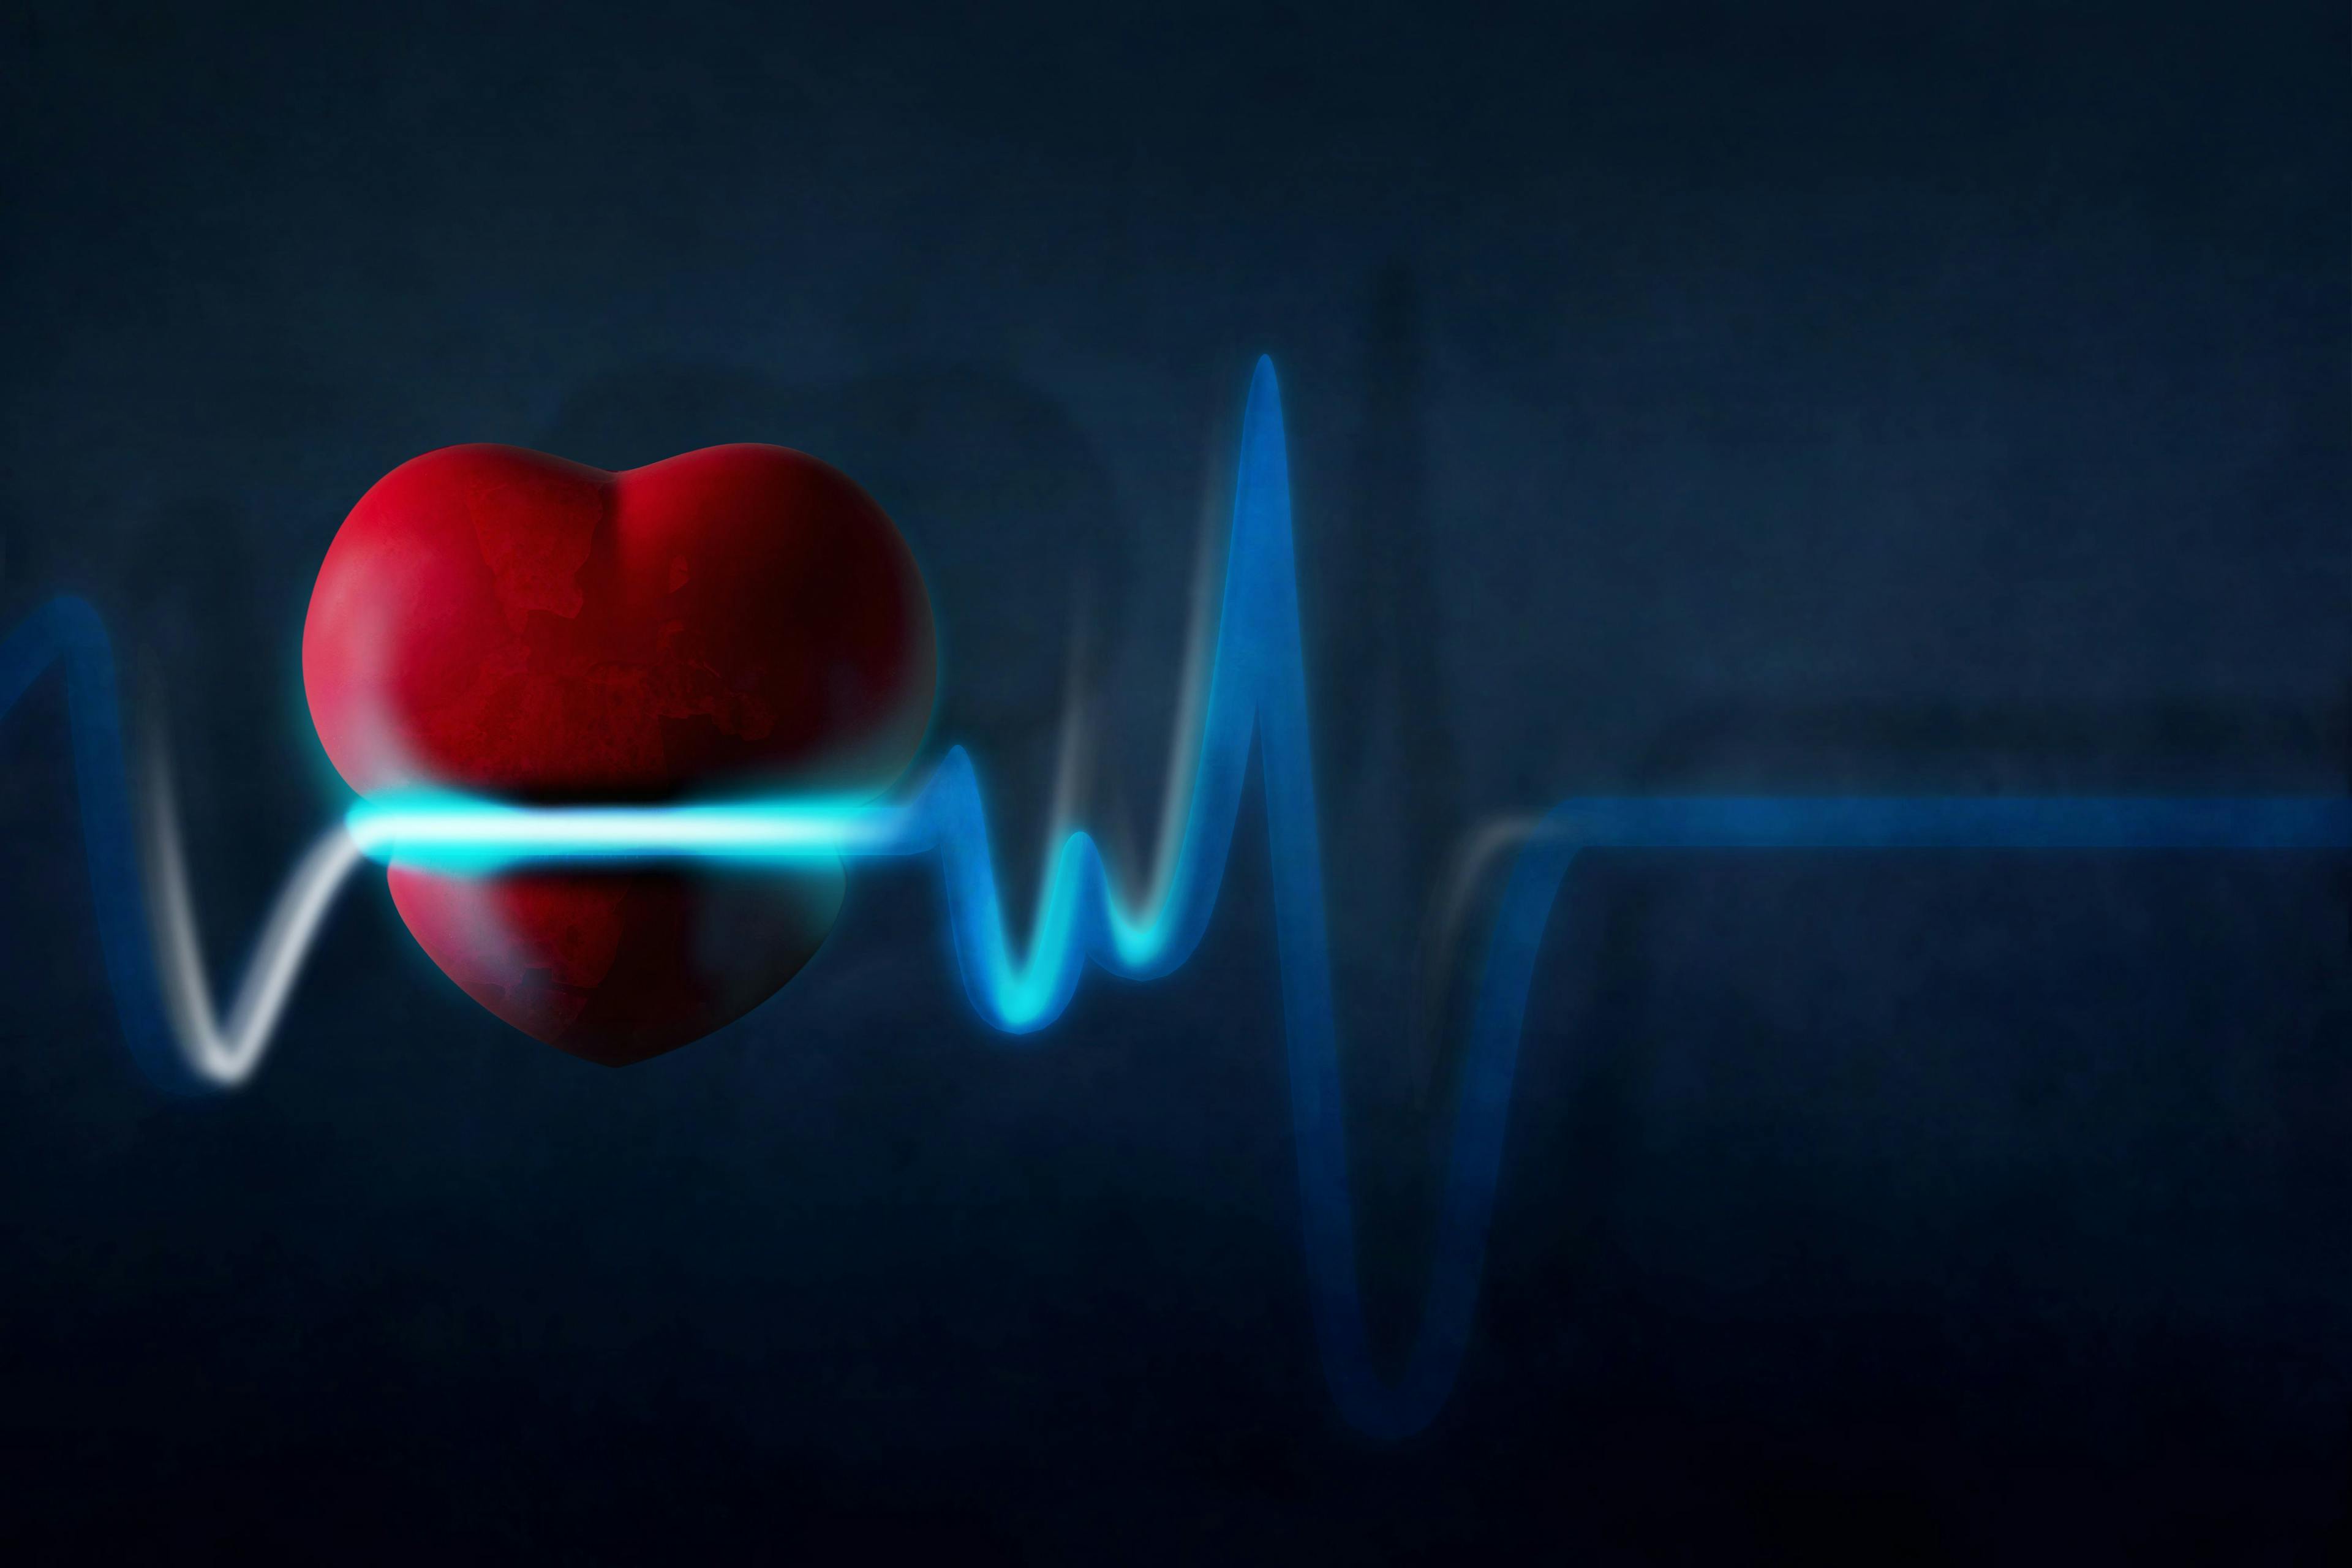 Heart Pain or Attack Concept, Health care | Image Credit: blacksalmon - stock.adobe.com